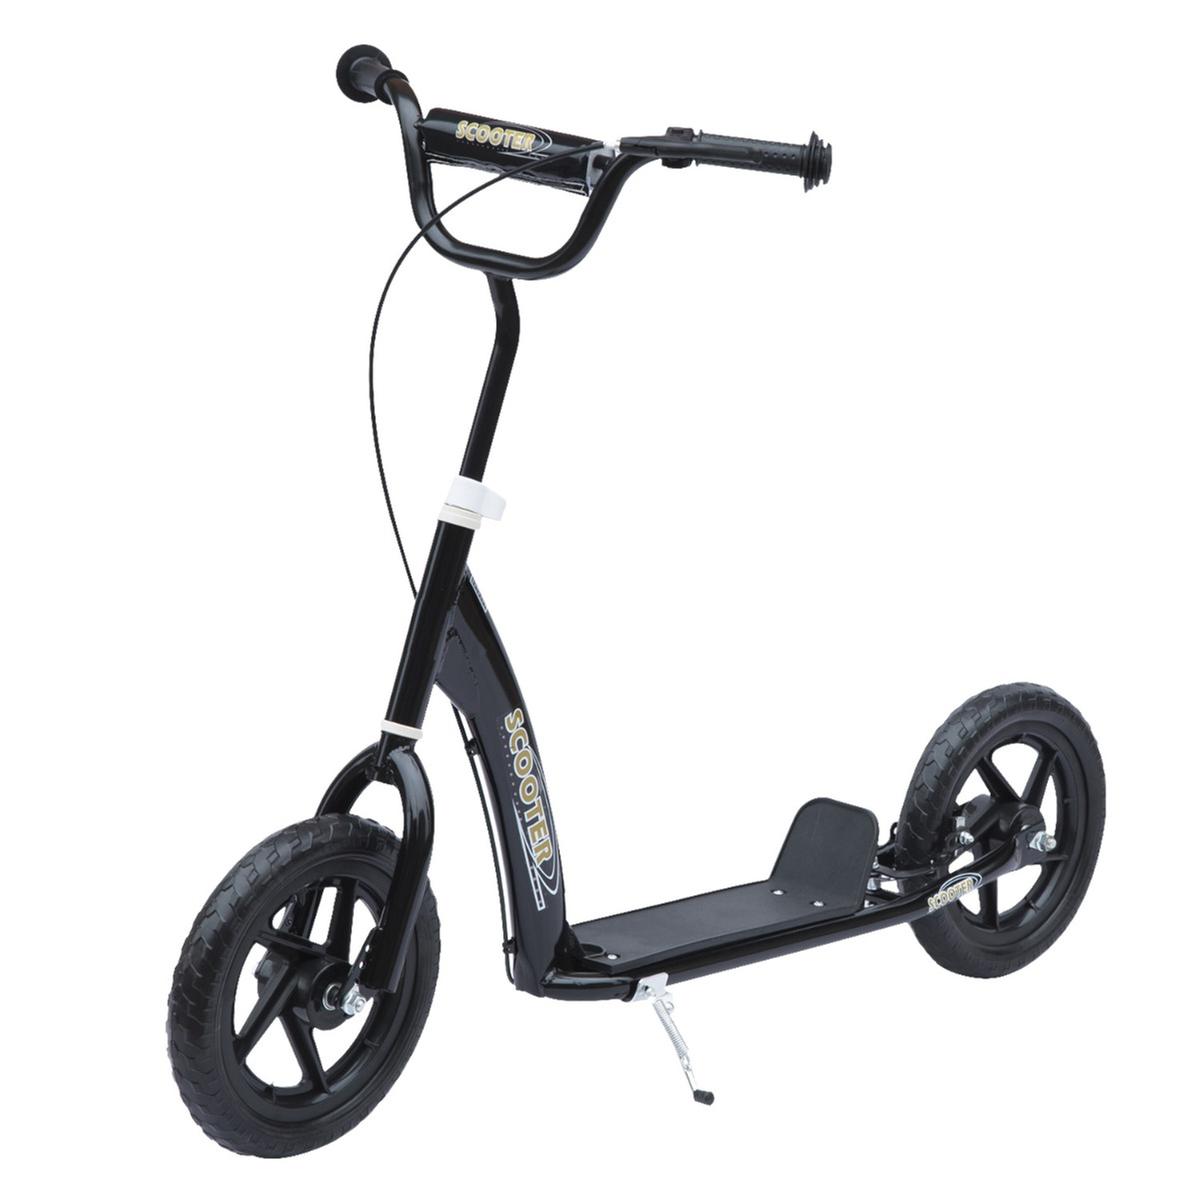 Homcom - Patinete Scooter Ajustable 2 ruedas Negro, Scooters En Linea